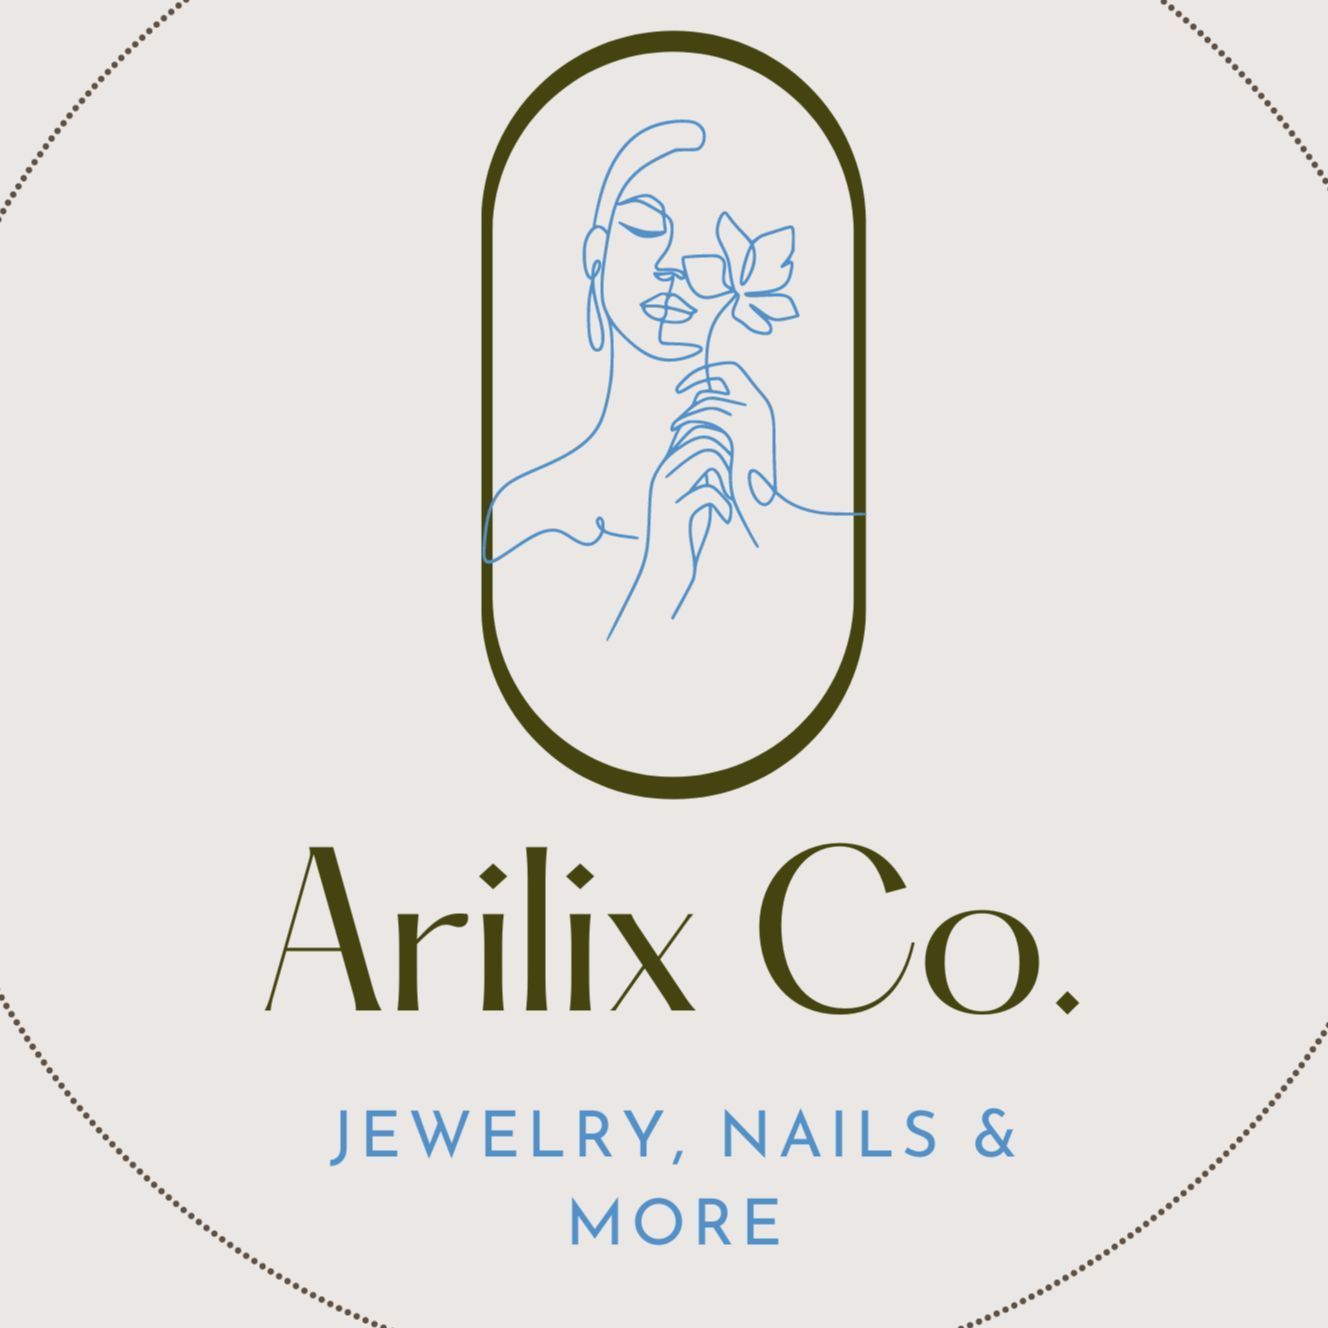 Arilix Co., Veteran's Ave., West Bend, 53090